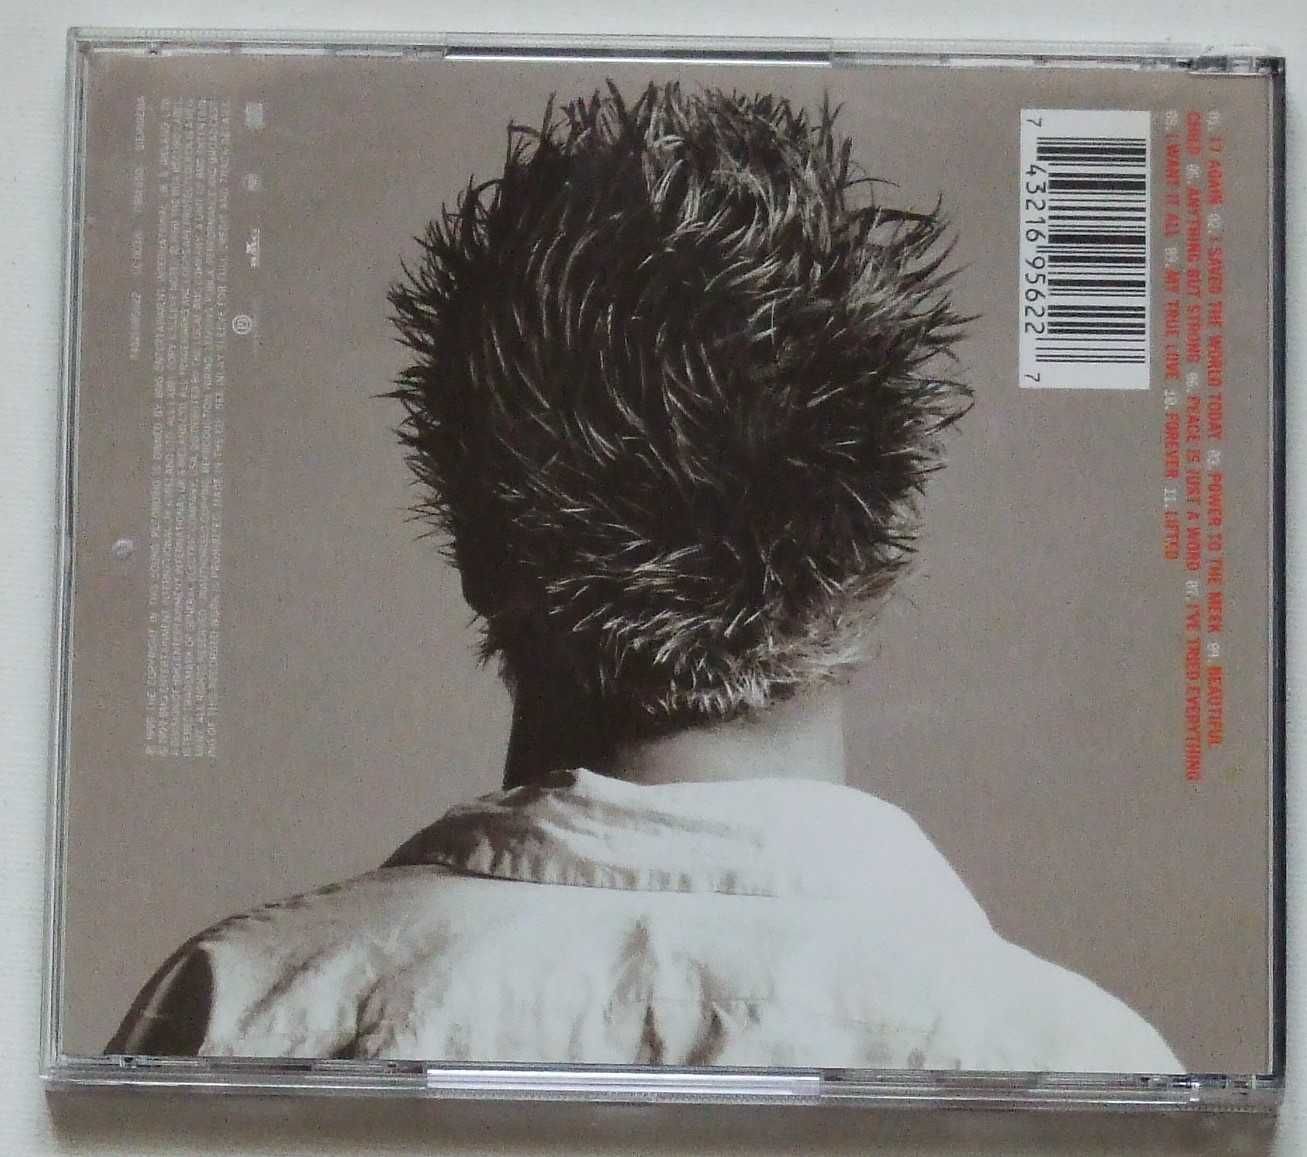 Eurythmics – Peace, CD